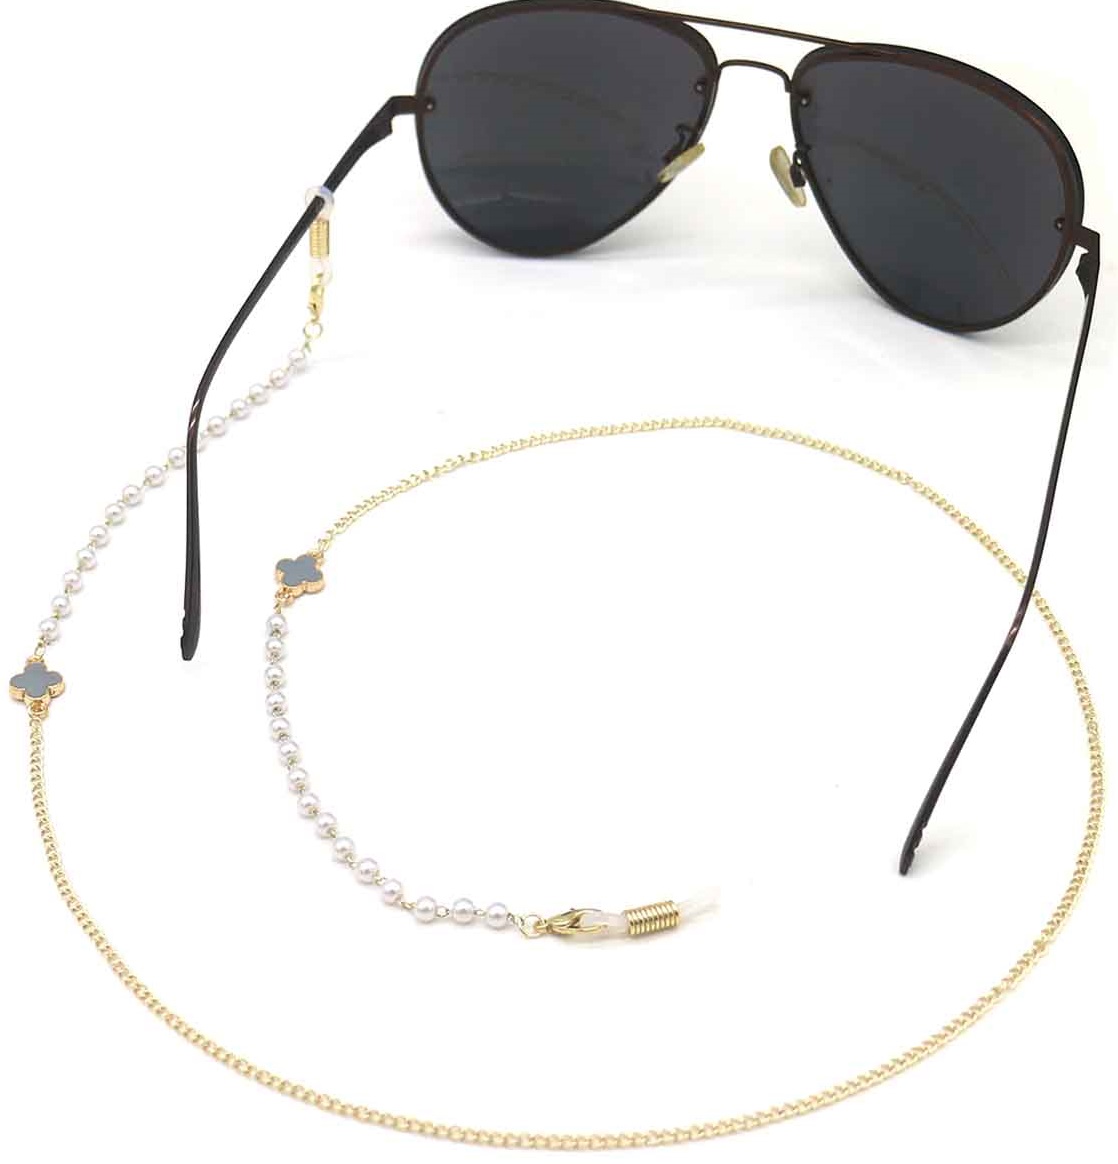 A-D14.2  GL004-054-6 Sunglass Chain Pearls Clover Grey